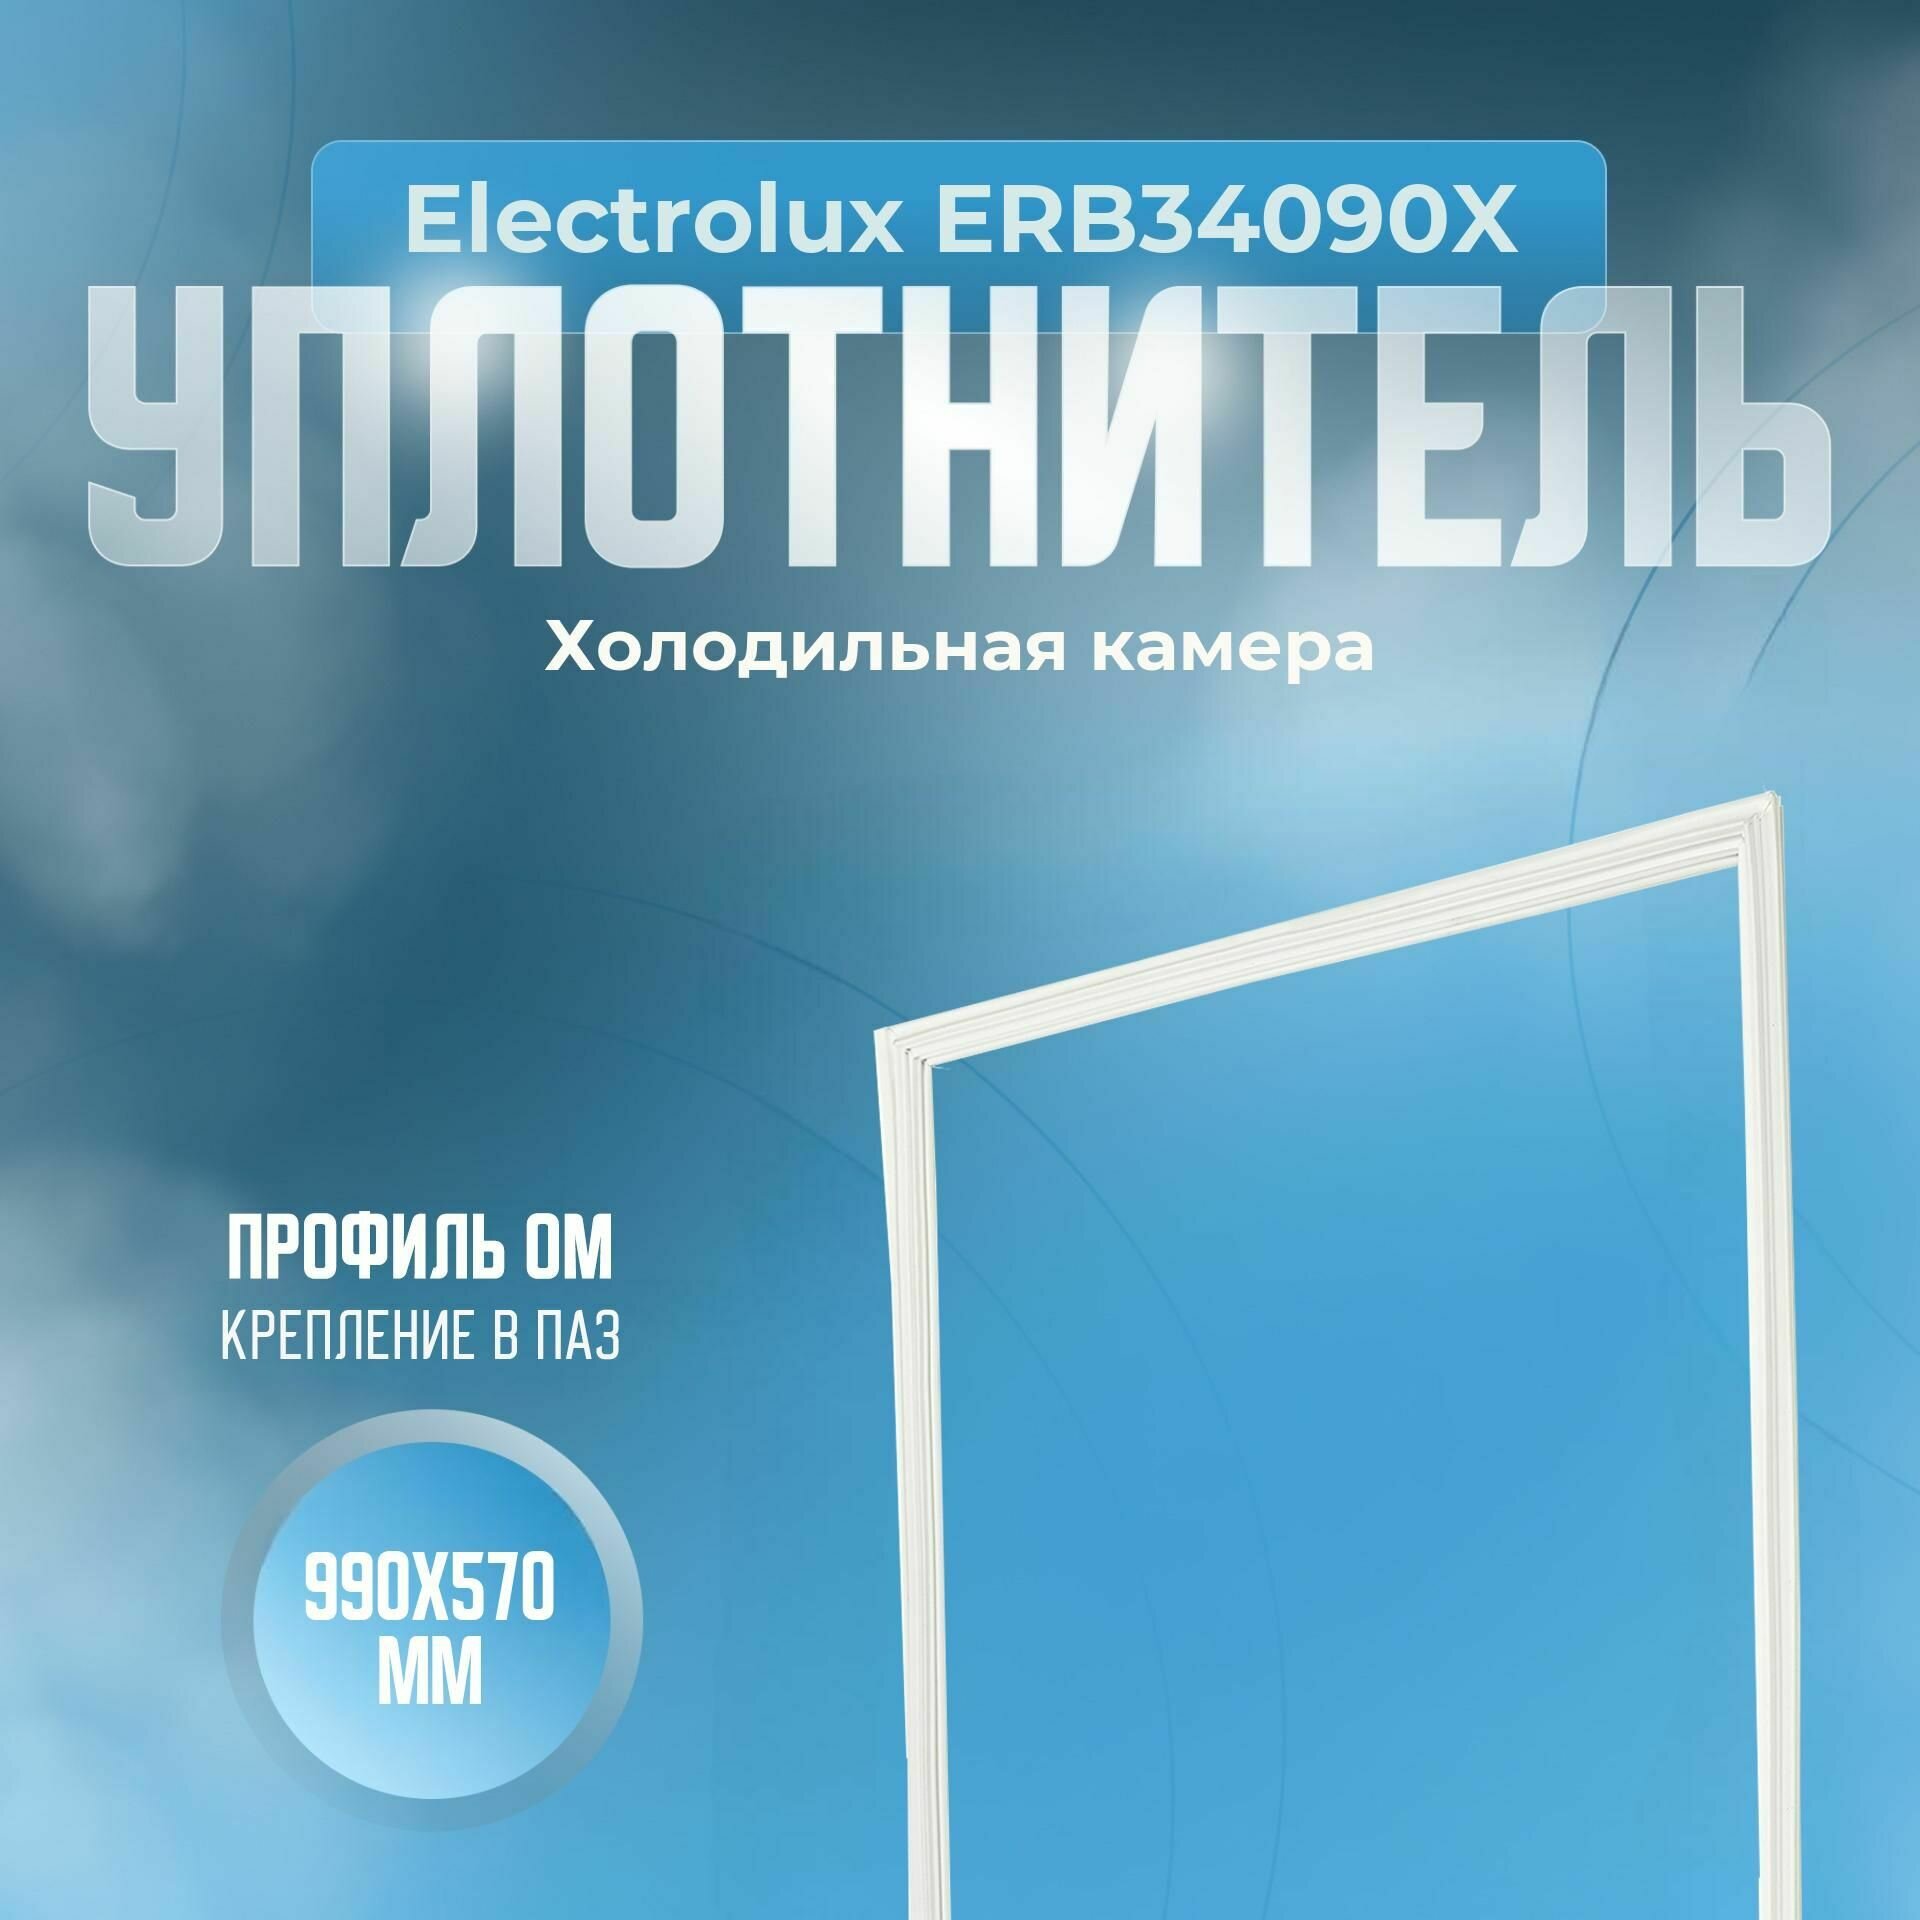 Уплотнитель Electrolux ERB34090X. х. к, Размер - 990х570 мм. ОМ